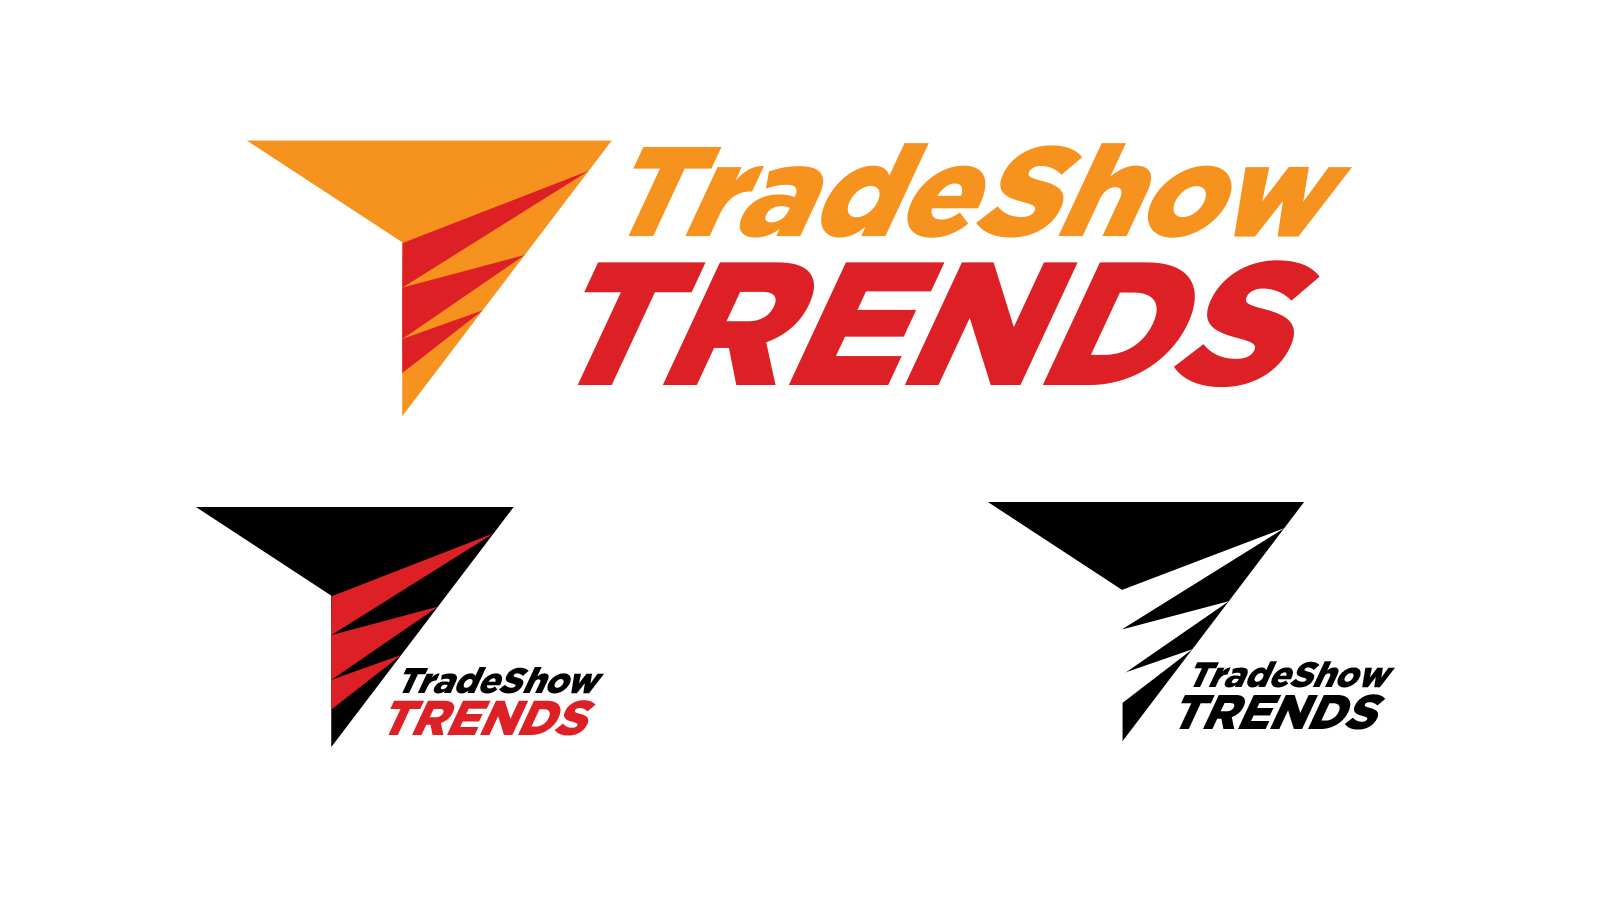 tradeshow-trends-logos-tmoss.jpg